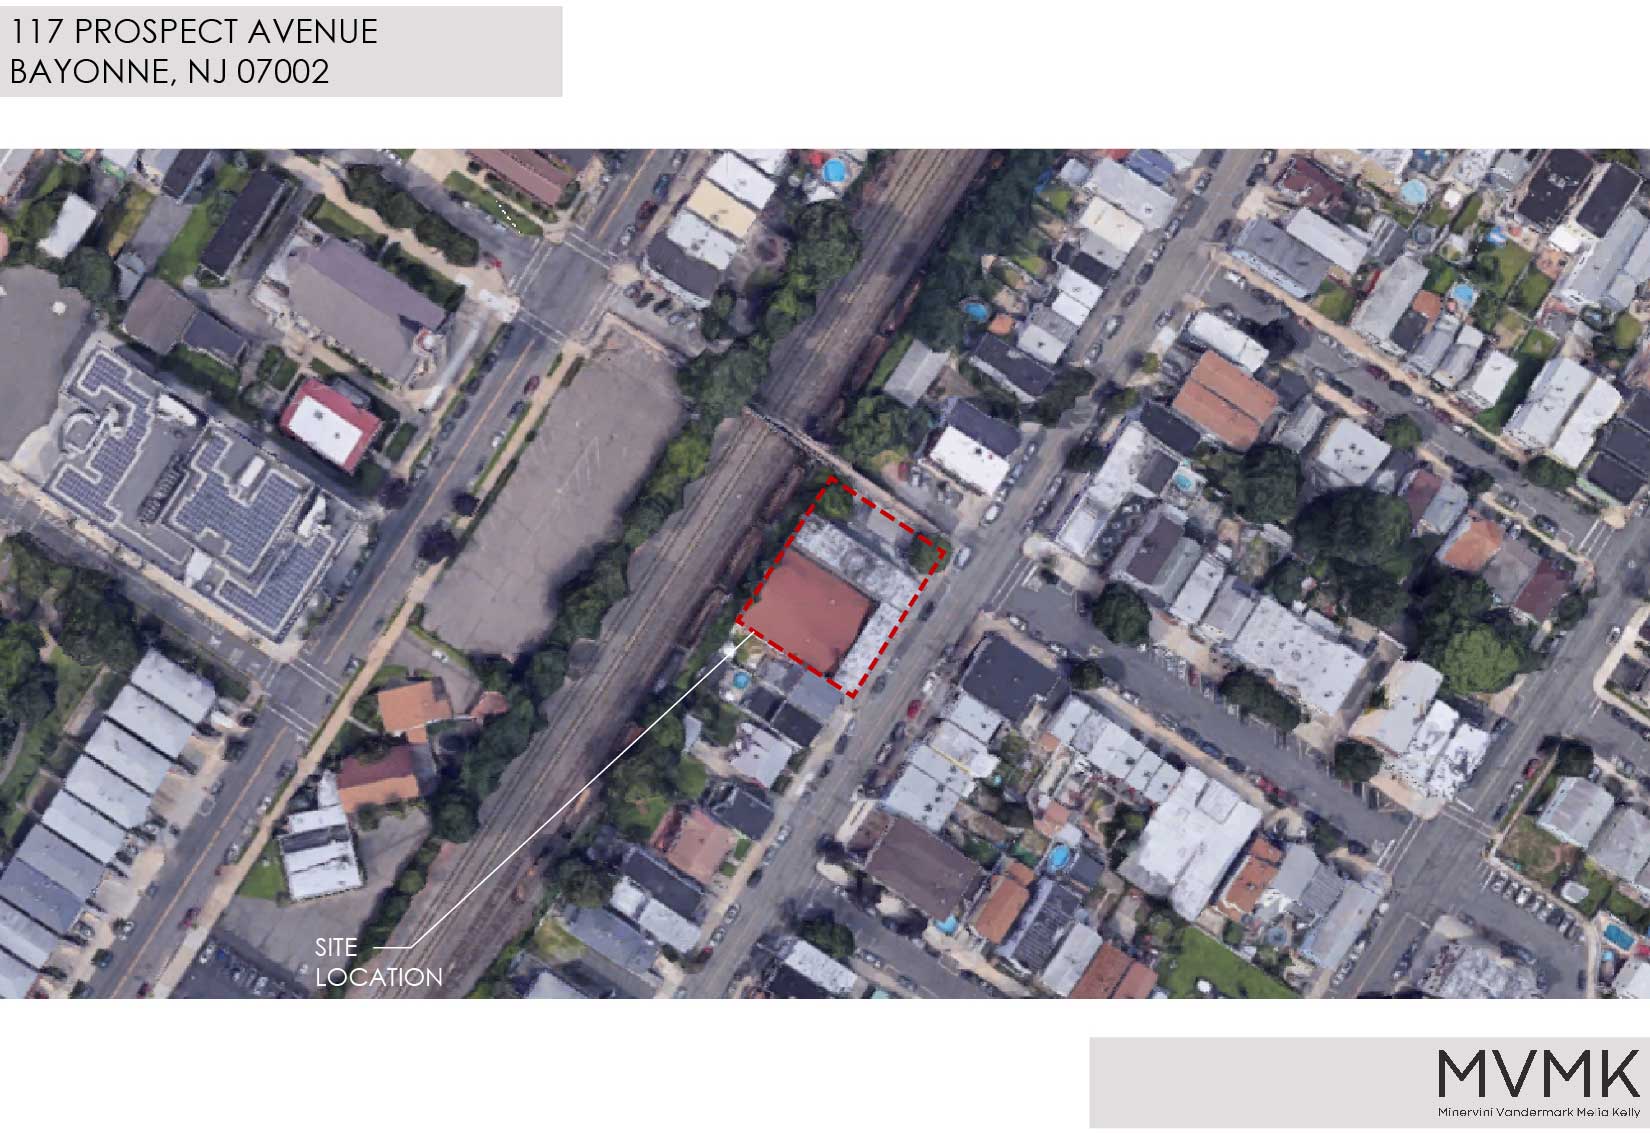 117 121 Prospect Avenue Bayonne Development Map